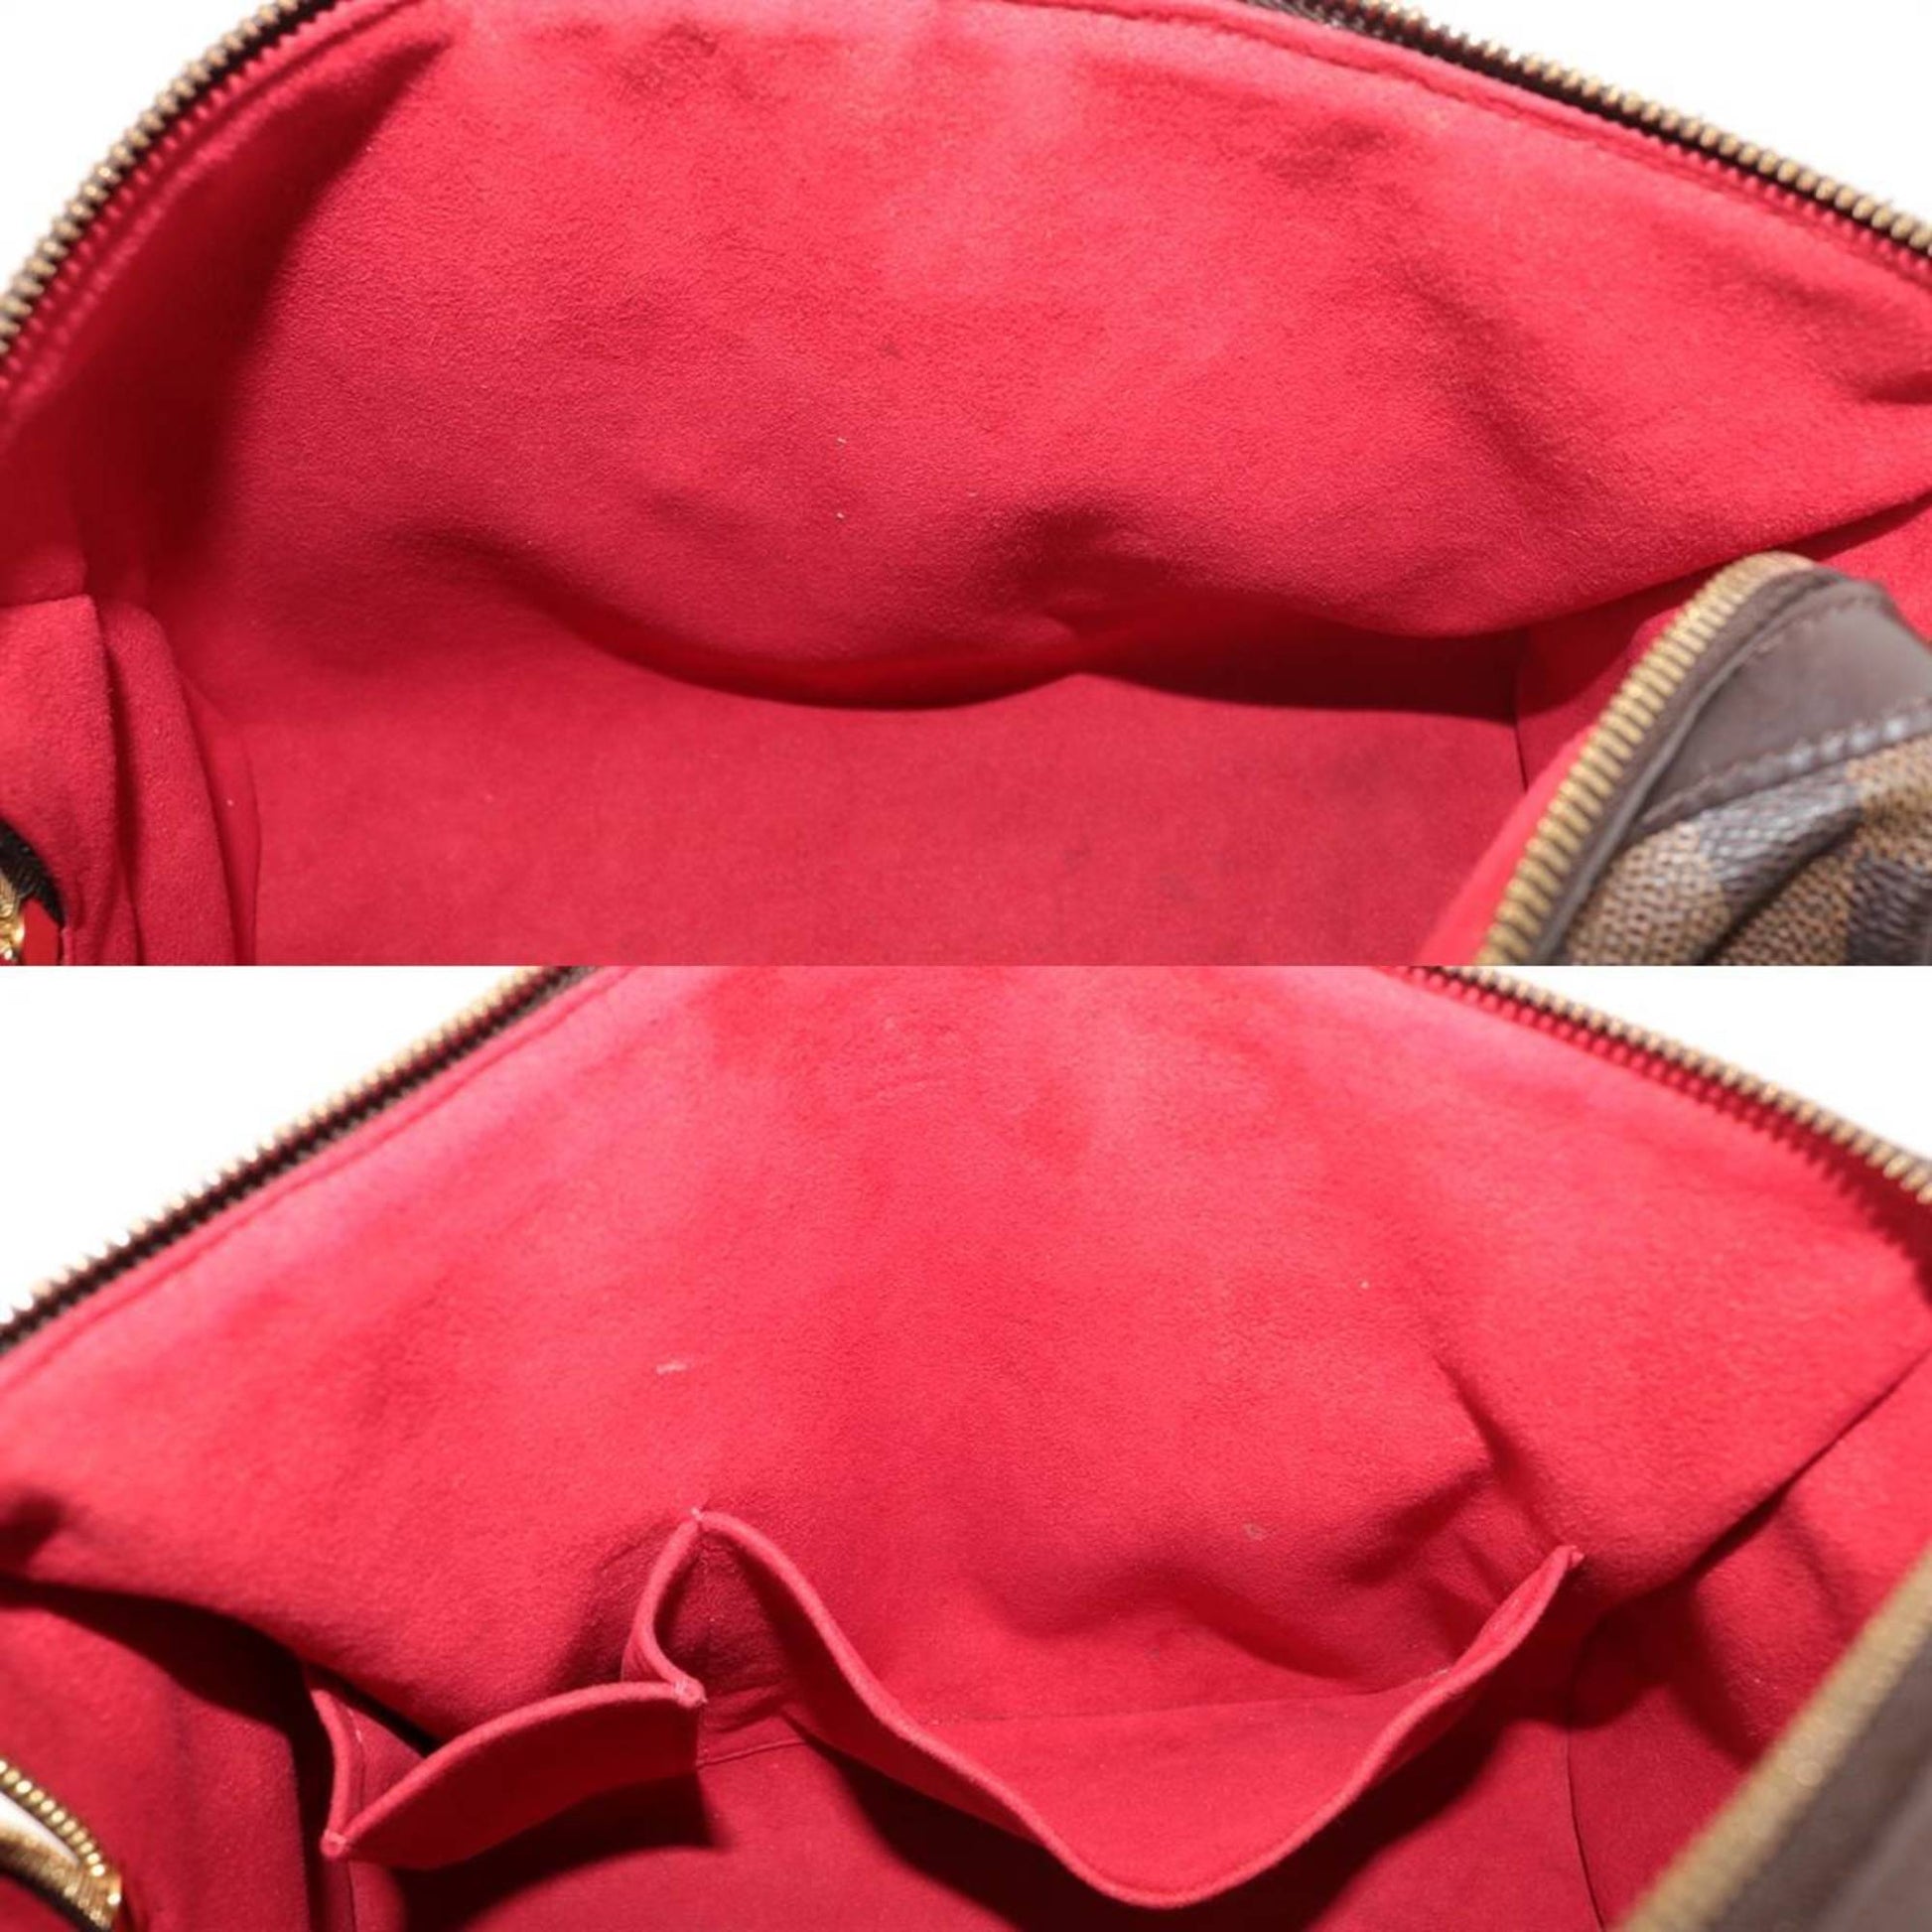 Louis Vuitton Berkeley Handbag 383592